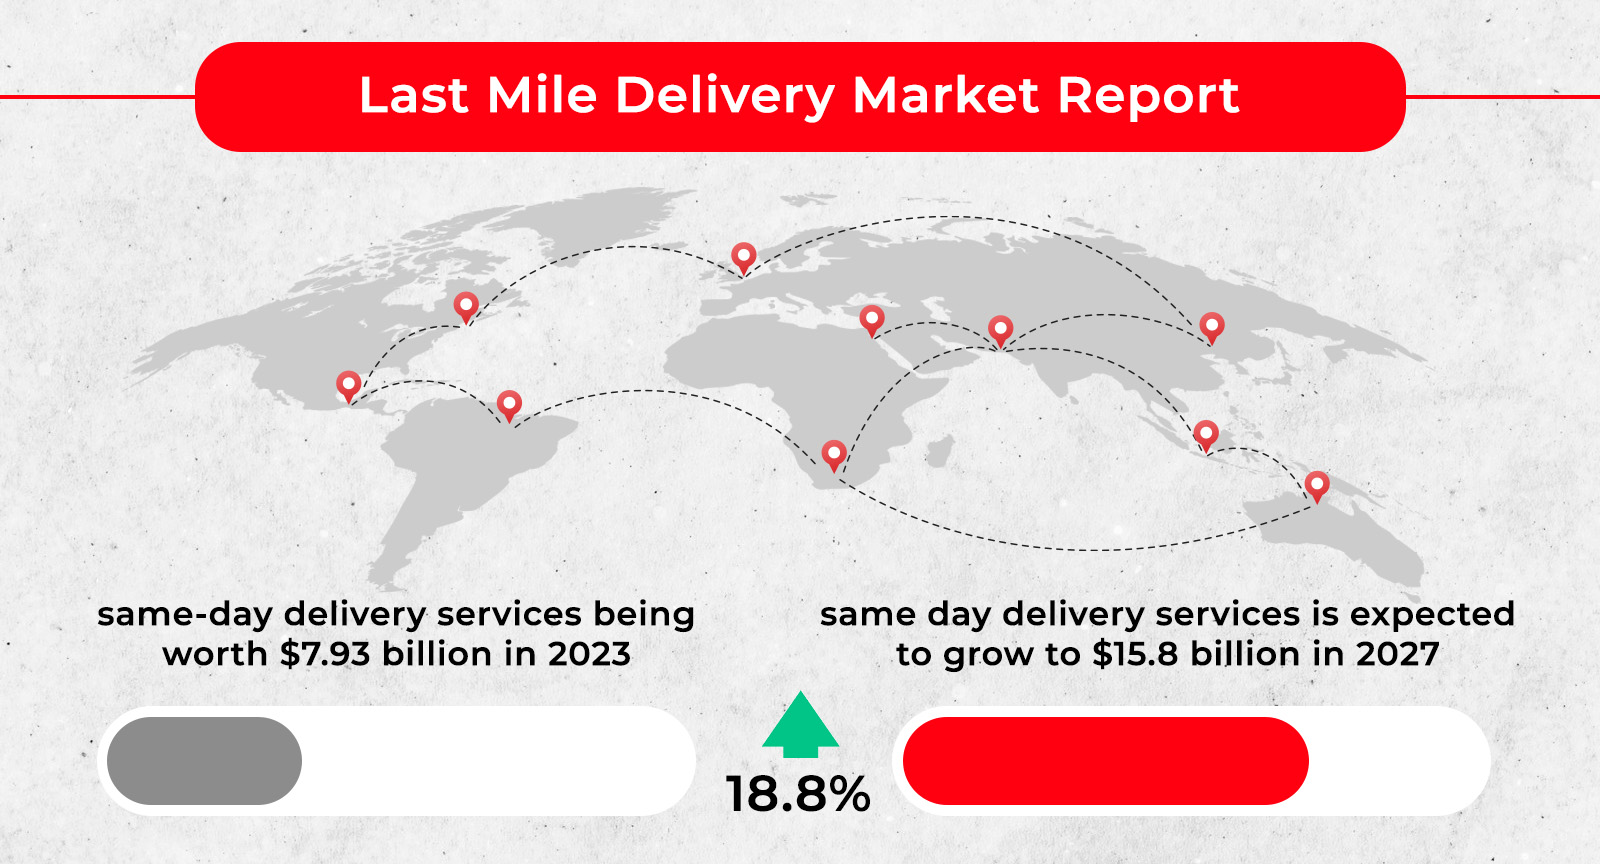 Last-Mile Delivery Market Report 2027